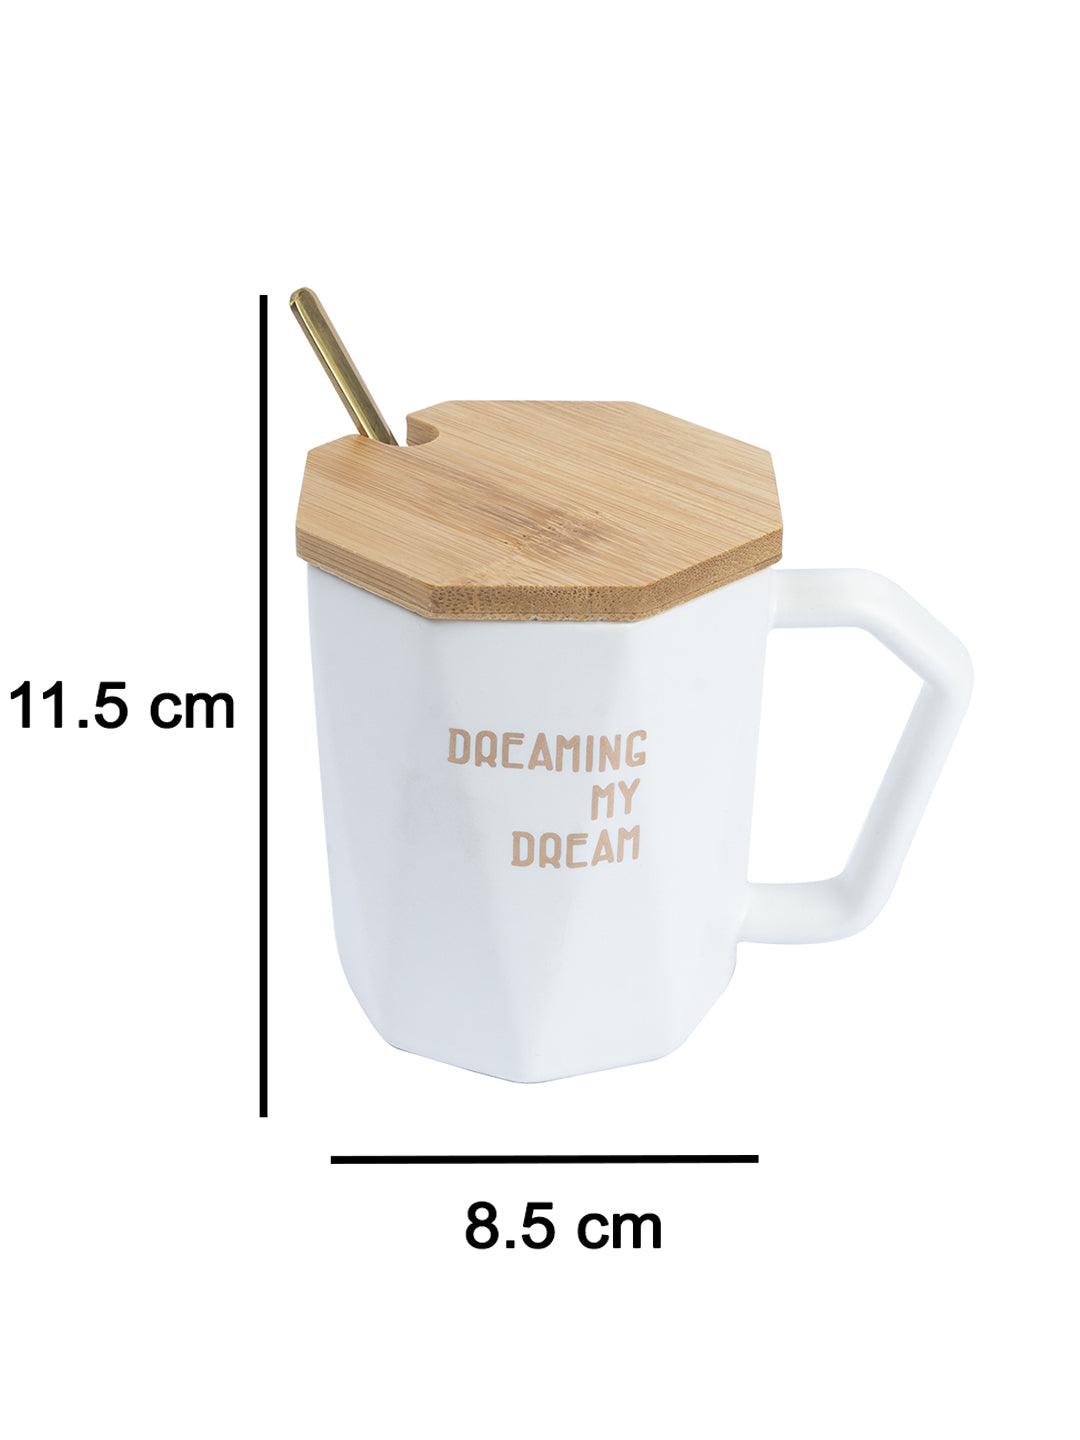 DREAMING MY Dream' Coffee Mug With Lid - White, 320 Ml - MARKET 99